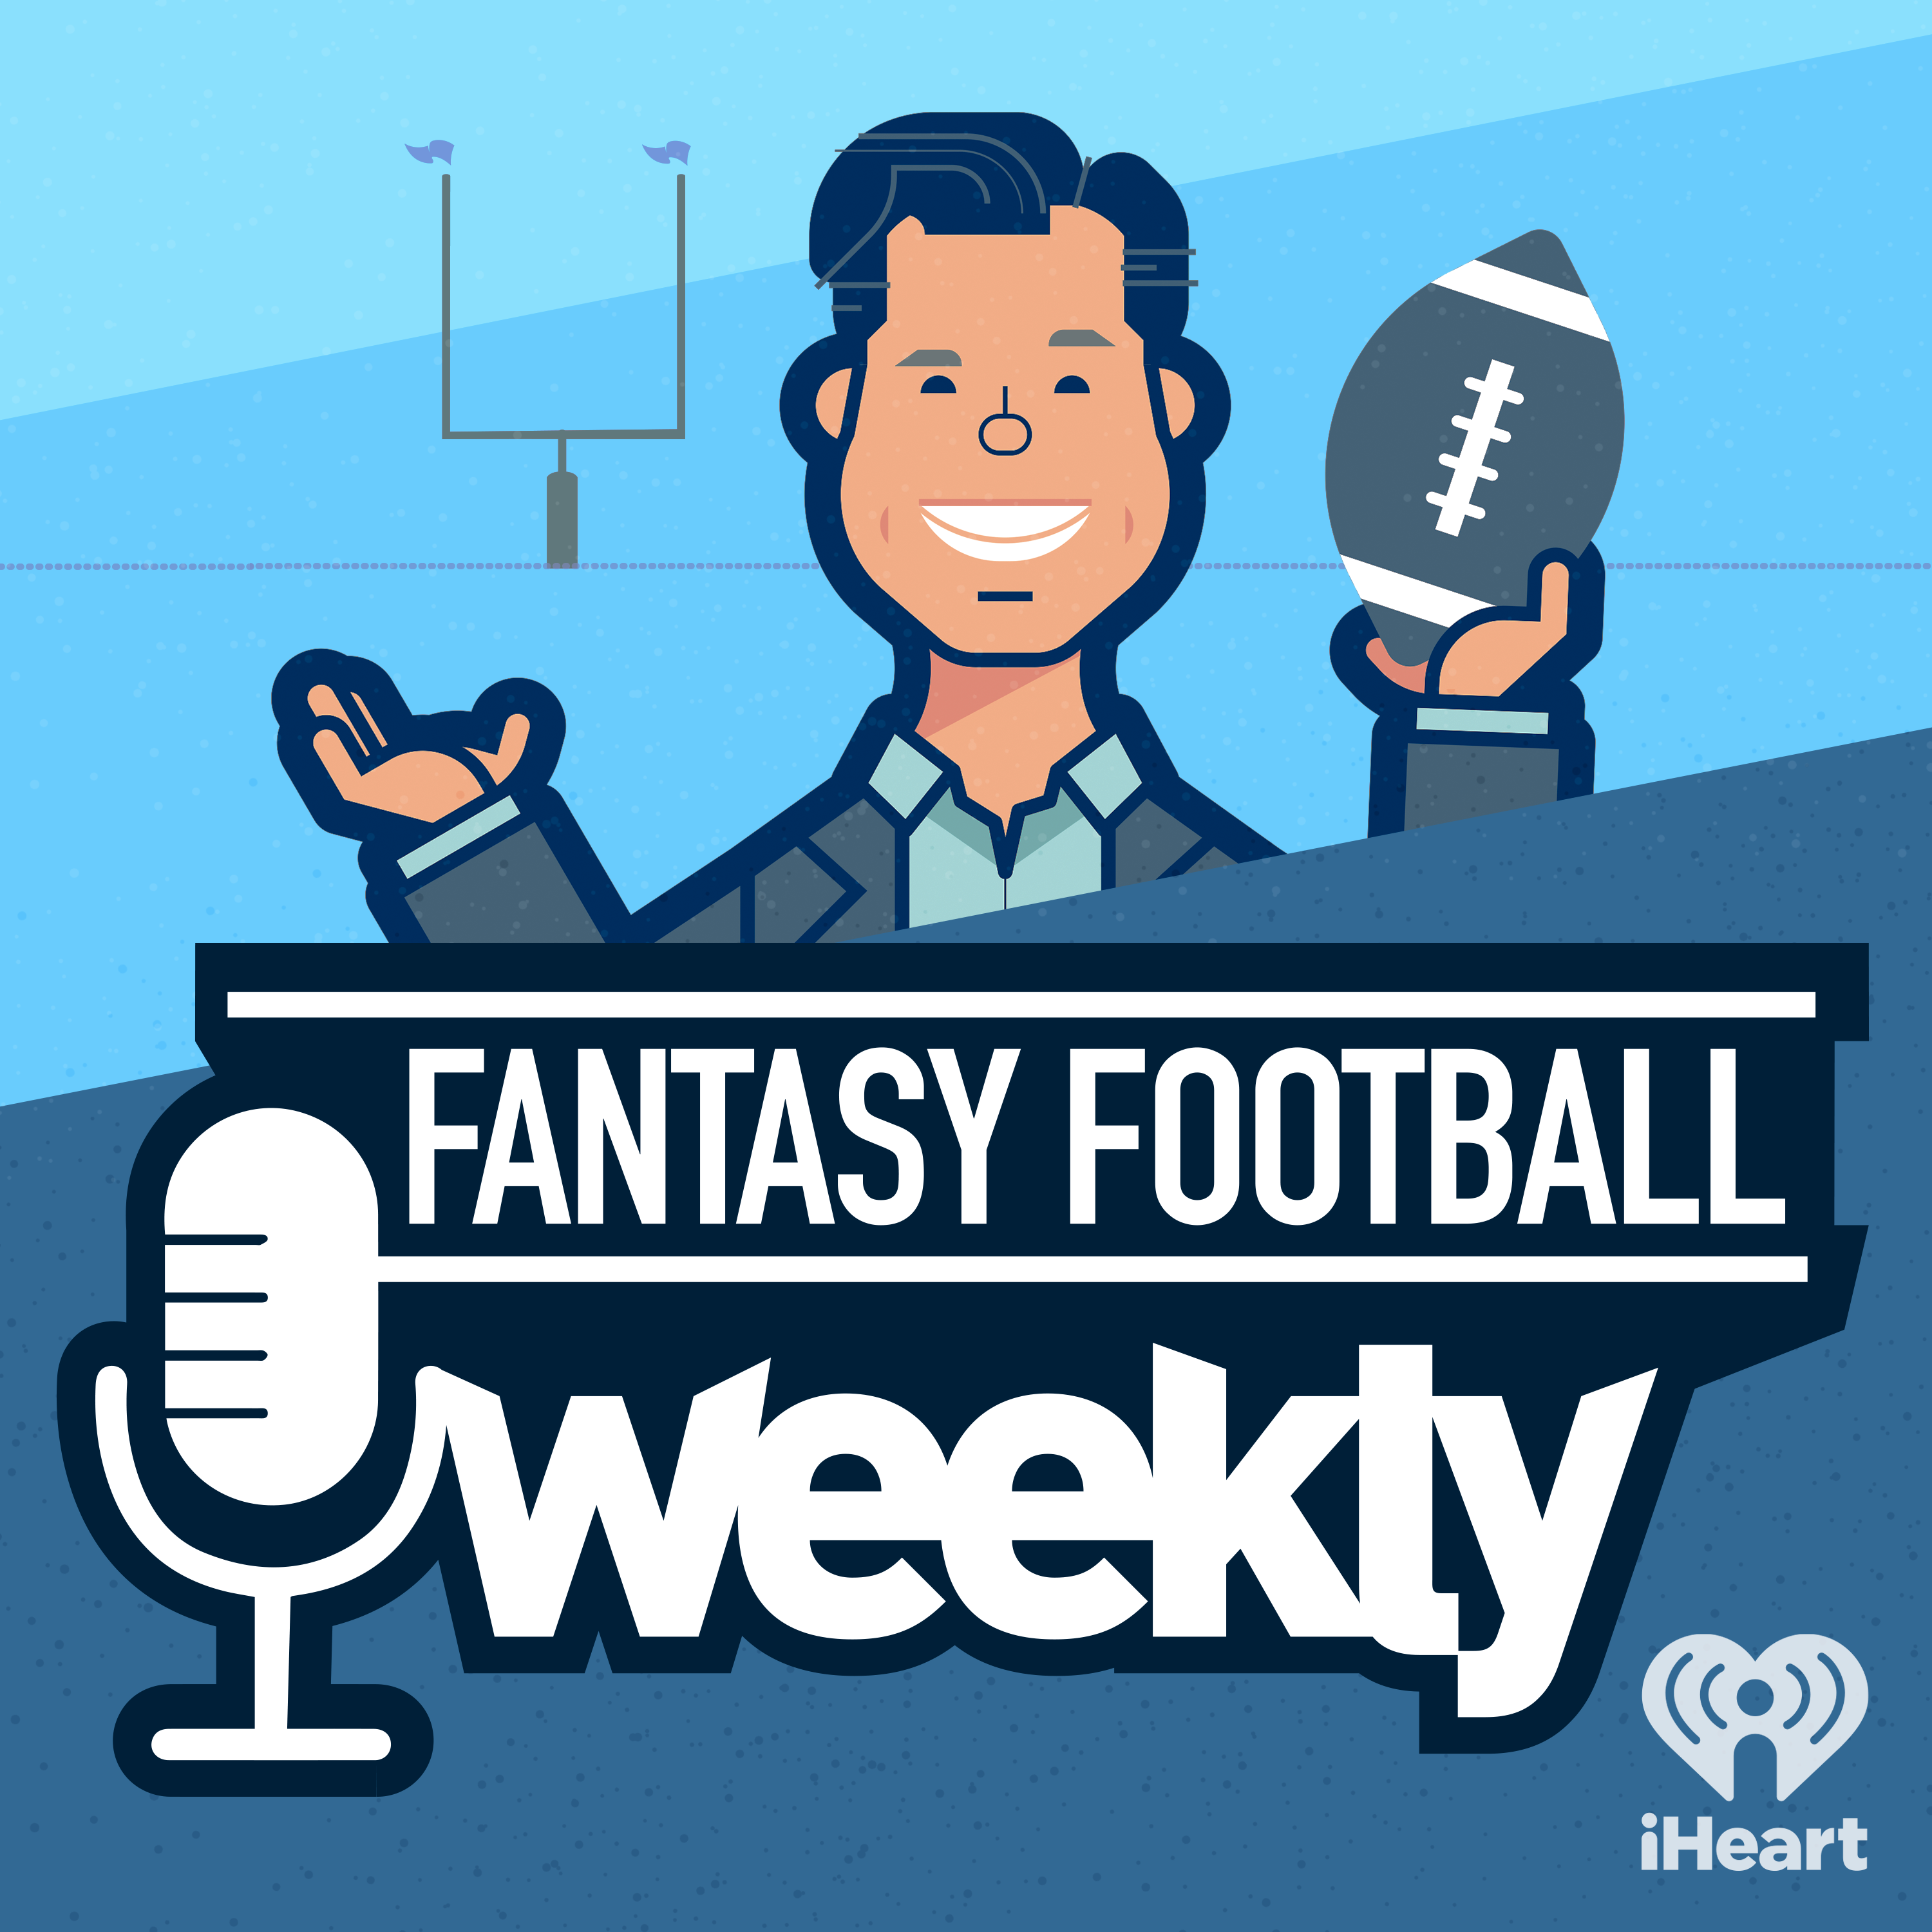 Week 7 Edition of 'Fantasy Football Weekly'